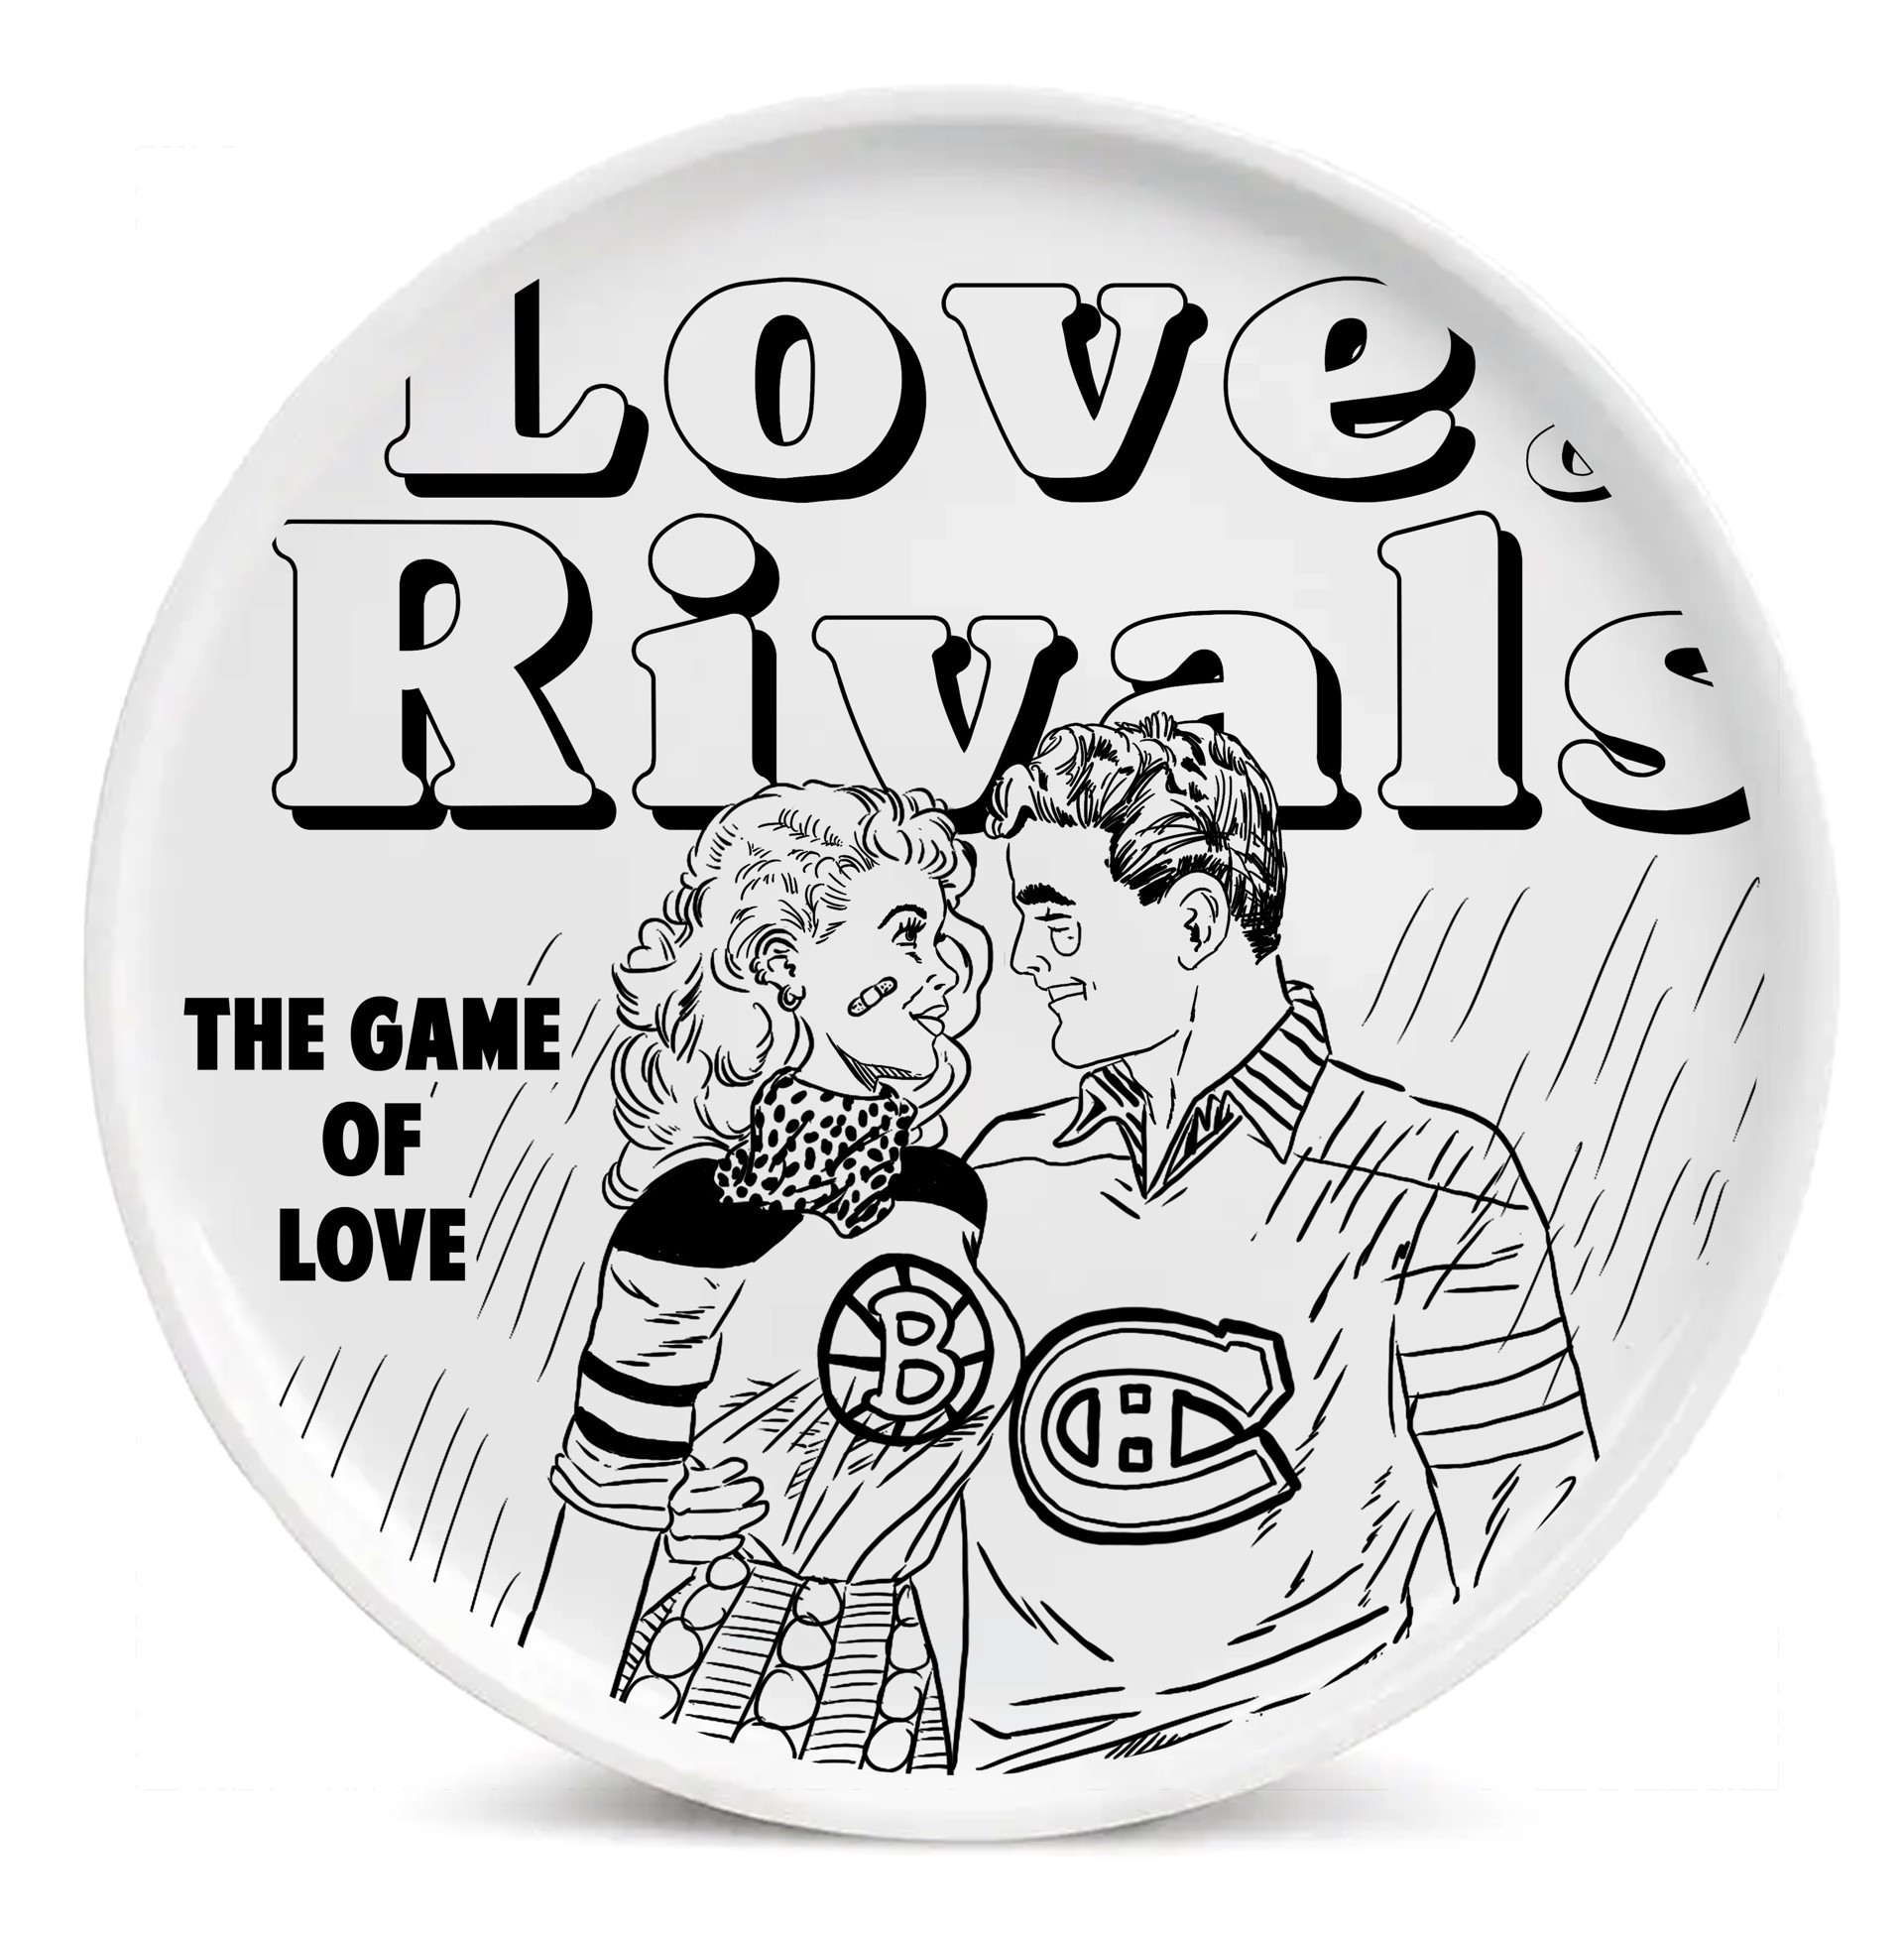 Love Rivals, MTL Vs Boston by Whatisadam